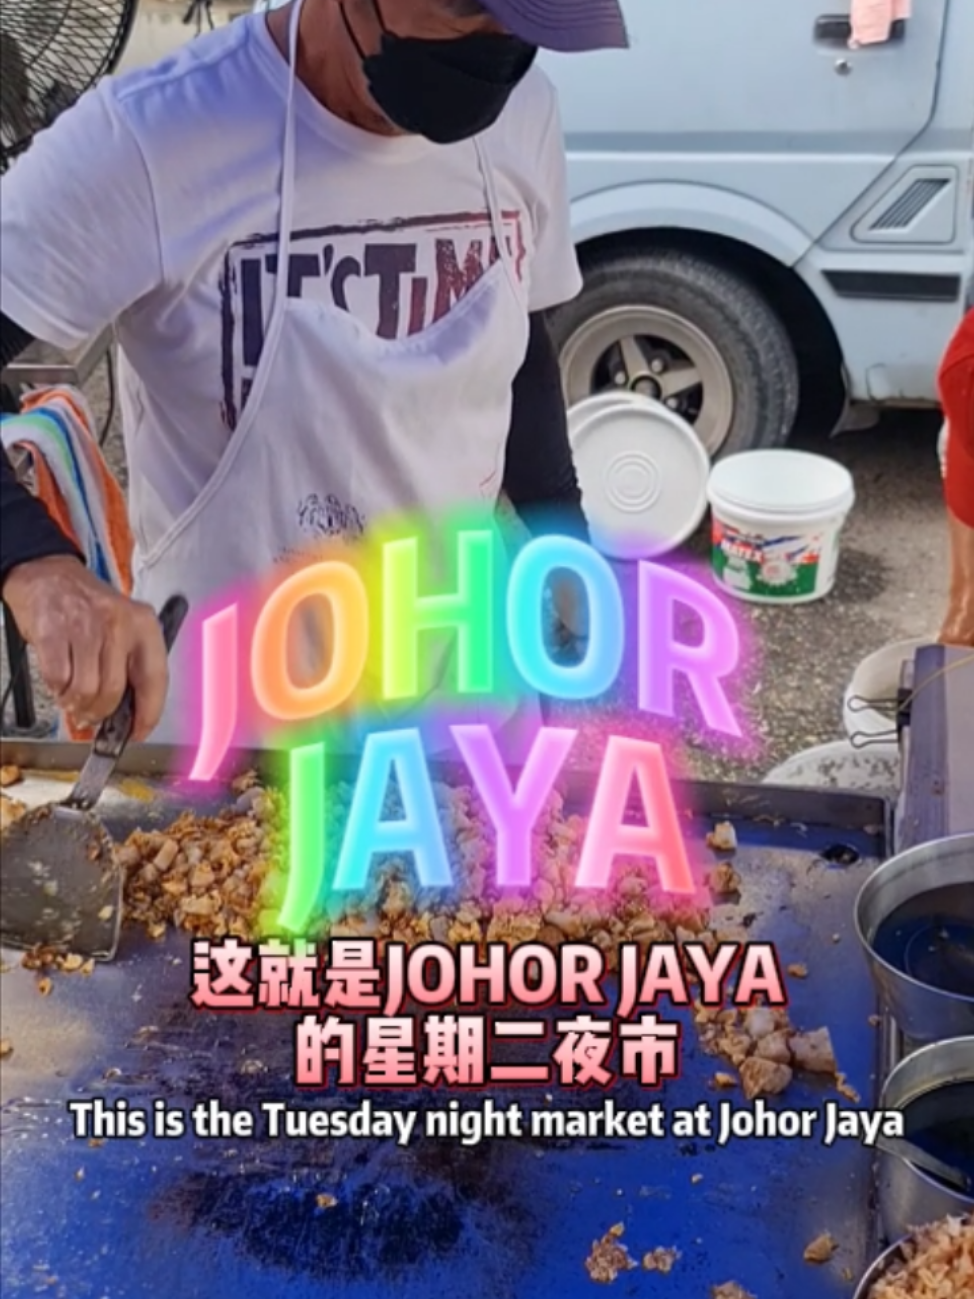 POPULAR JB HK FRIED CARROT CAKE JOHOR JAYA TUESDAY's images